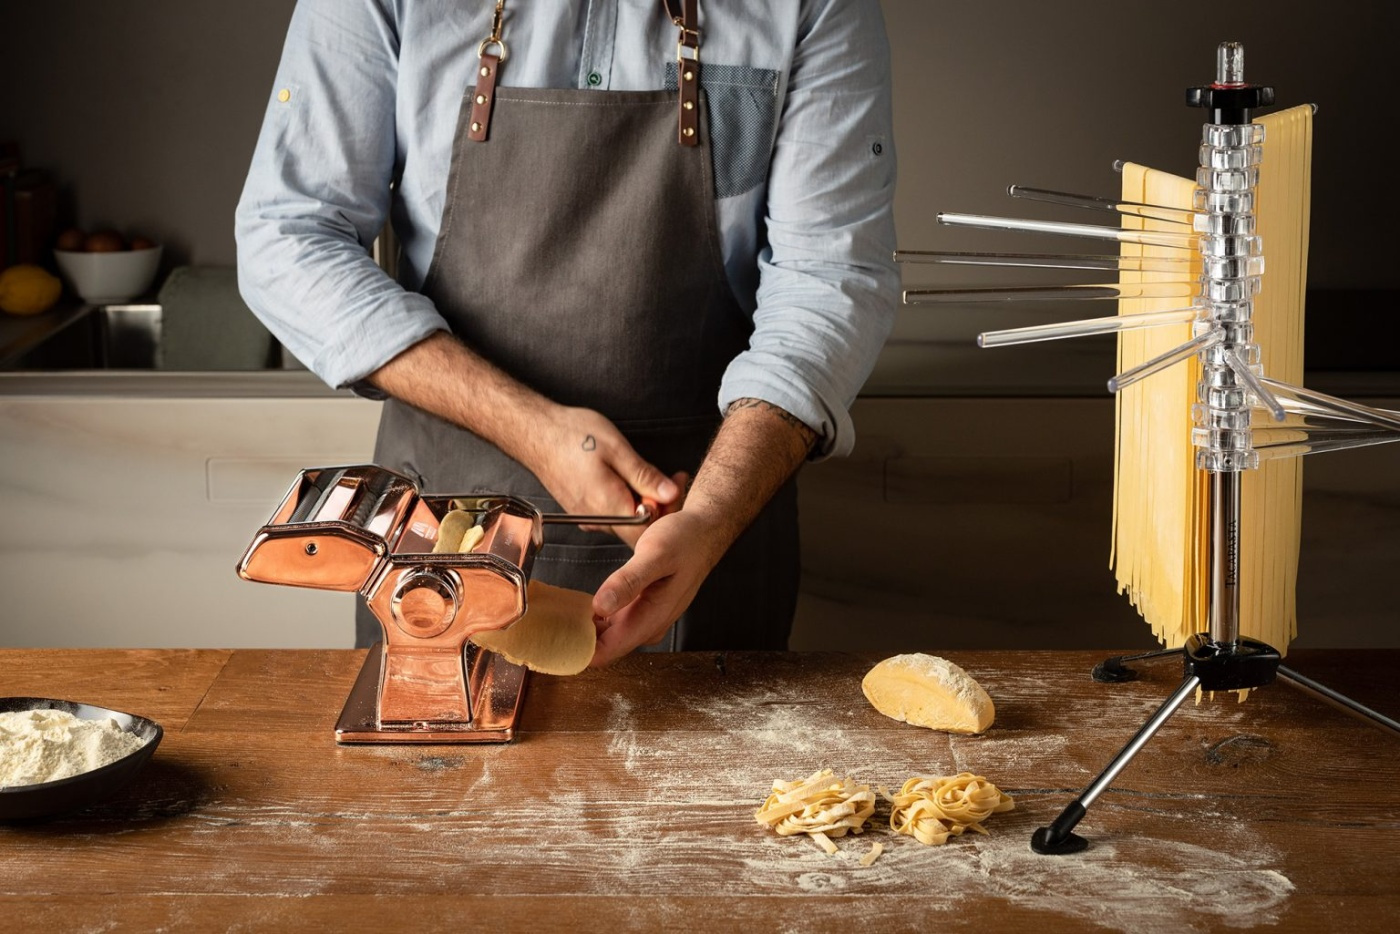 Marcato Ampia Classic 150 Pasta Machine